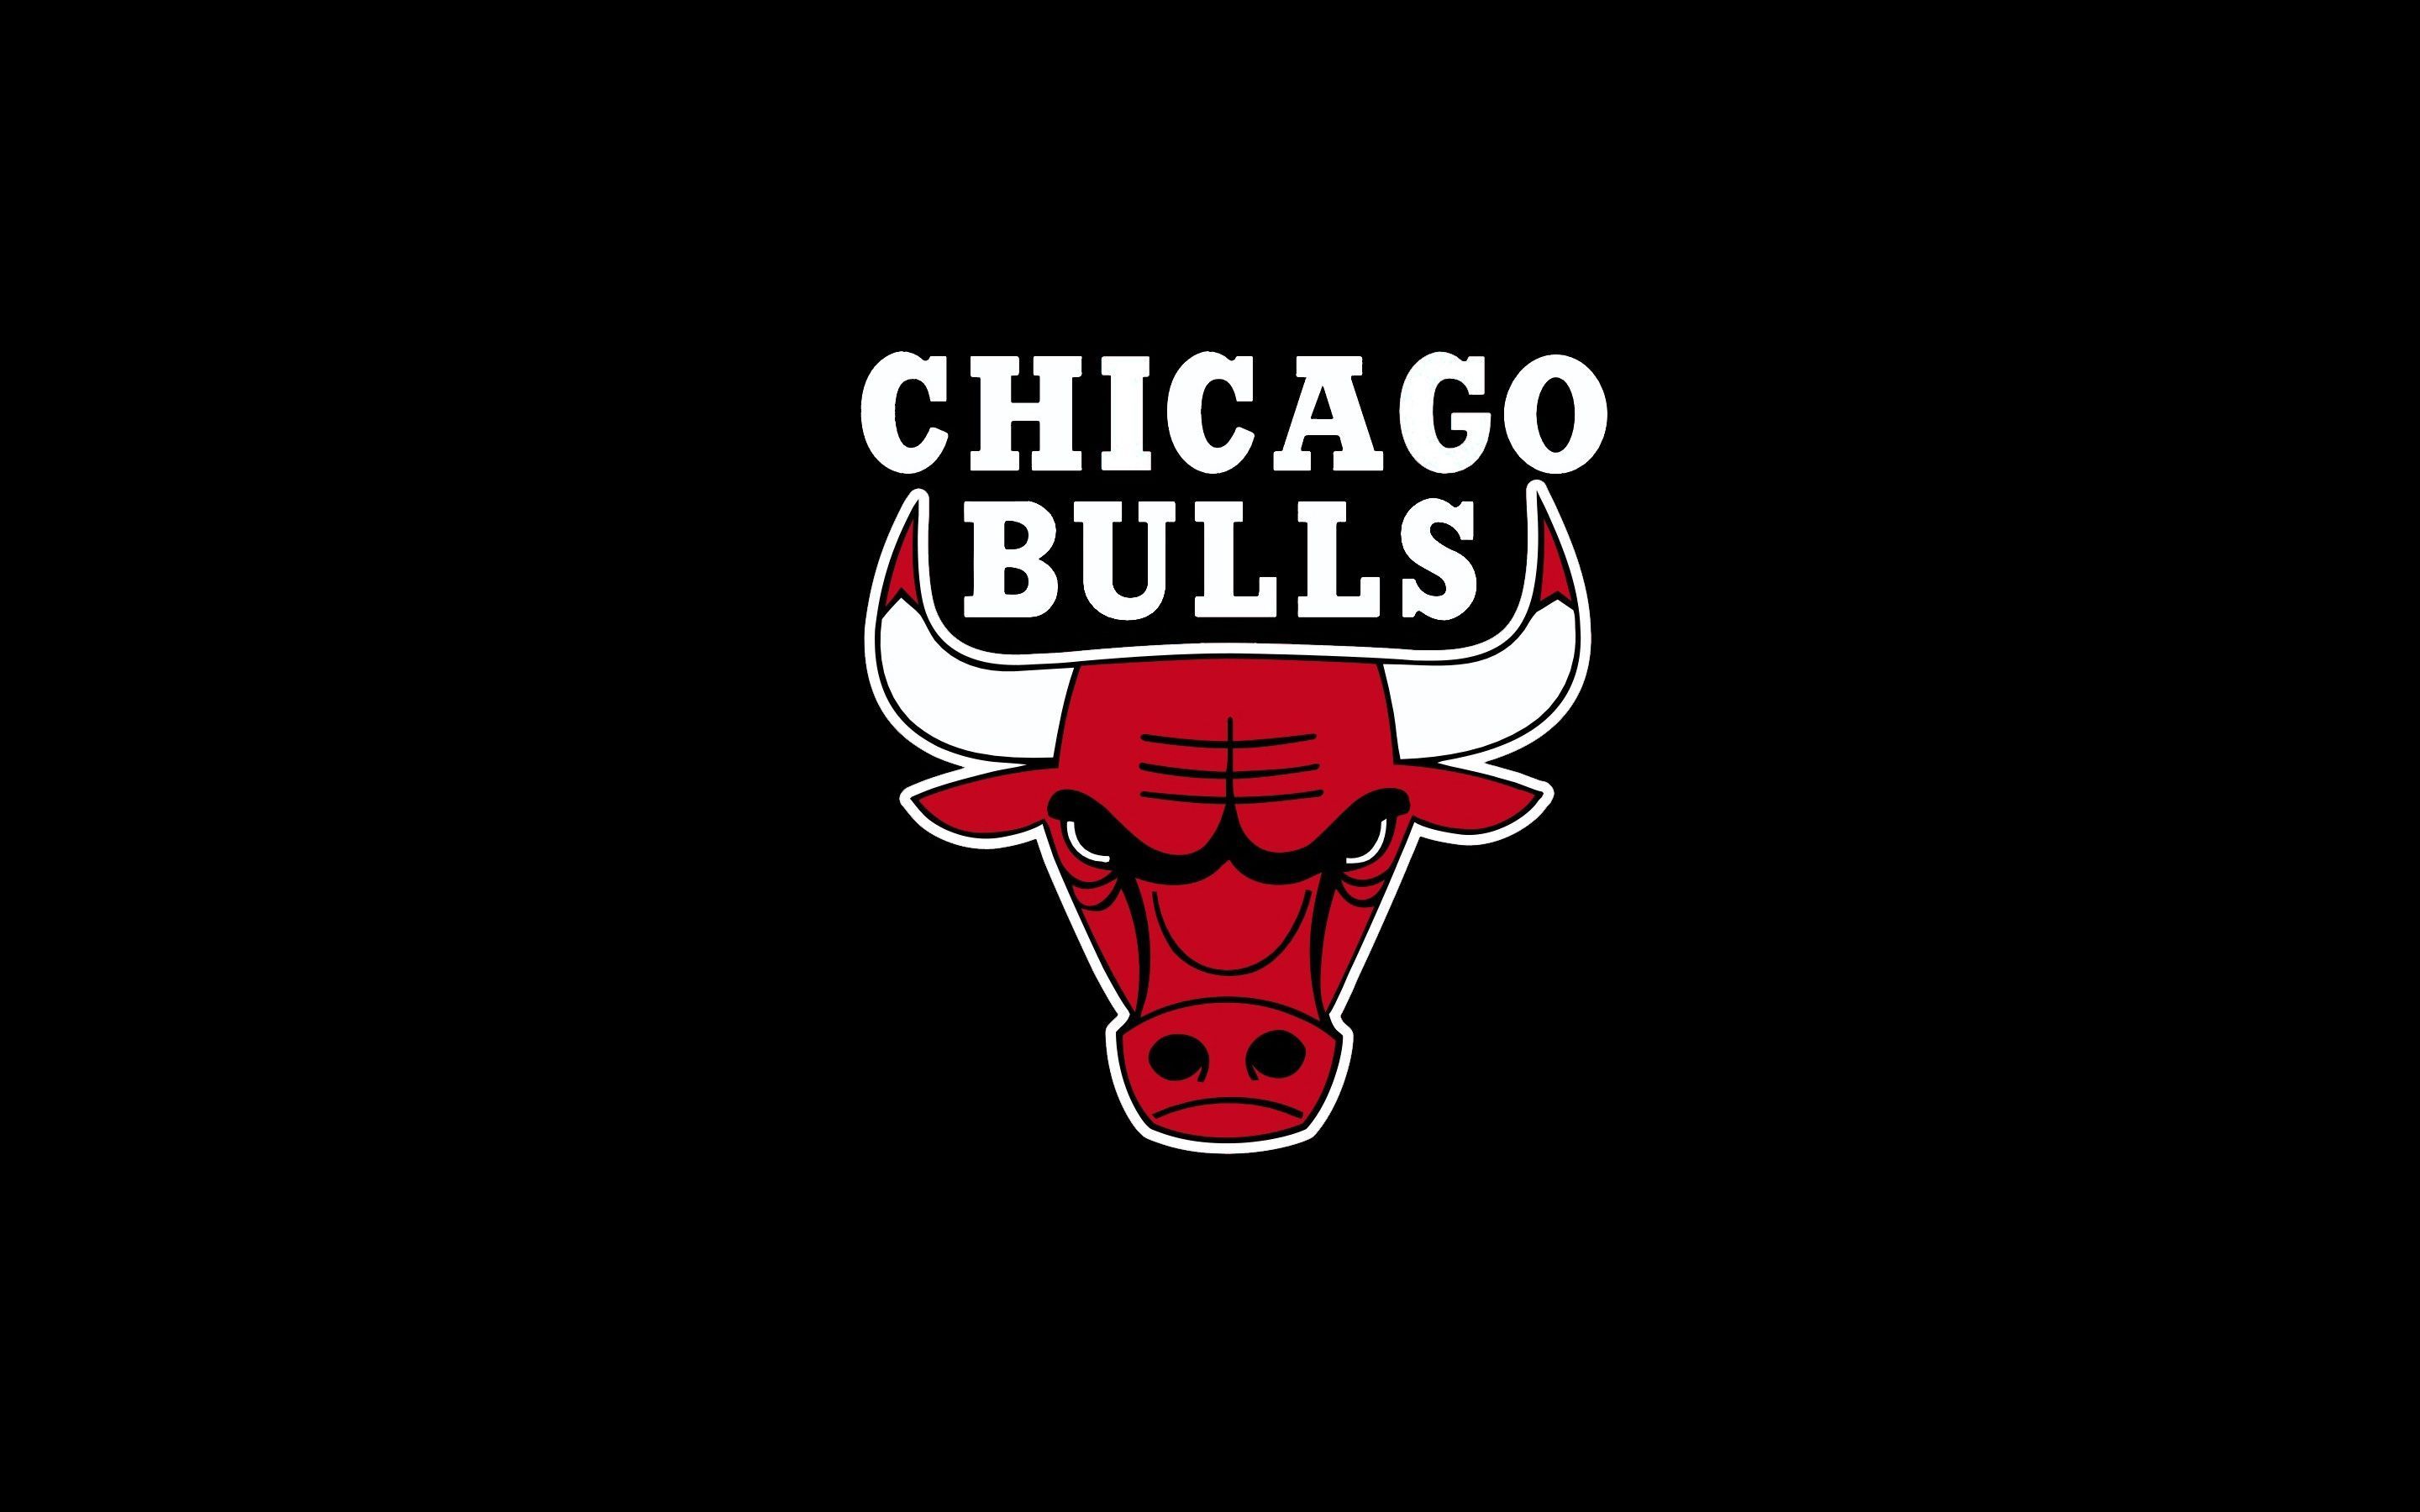 Chicago bulls, Chicago bulls basketball .com